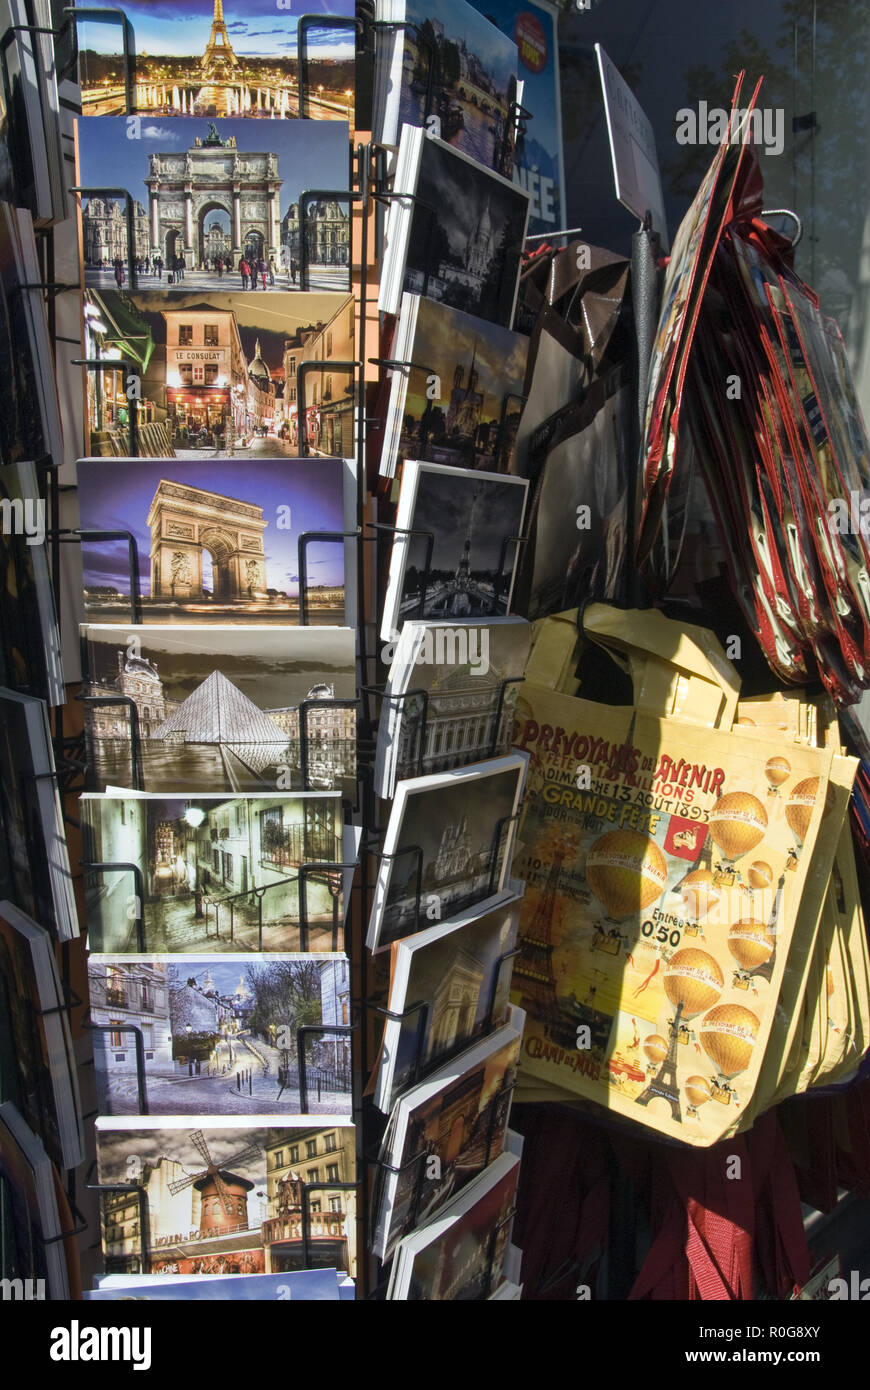 Souvenir postcards and bags for sale at a shop on Rue Mouffetard, a popular street of cafes, bars, souvenir shops, and markets, Paris, France. Stock Photo